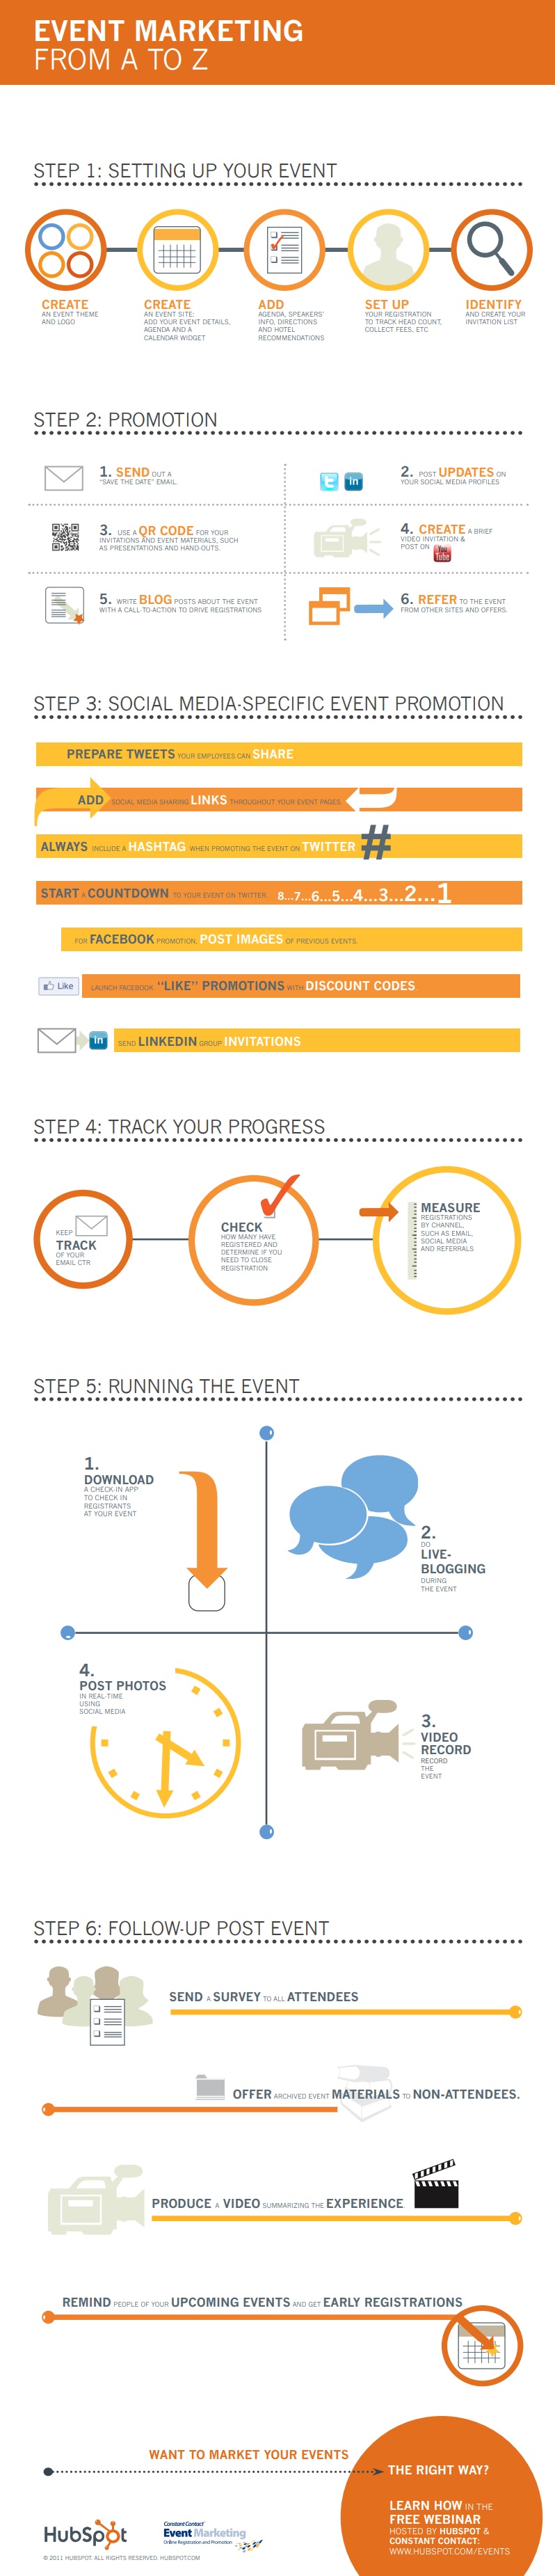 Event Marketing infographic